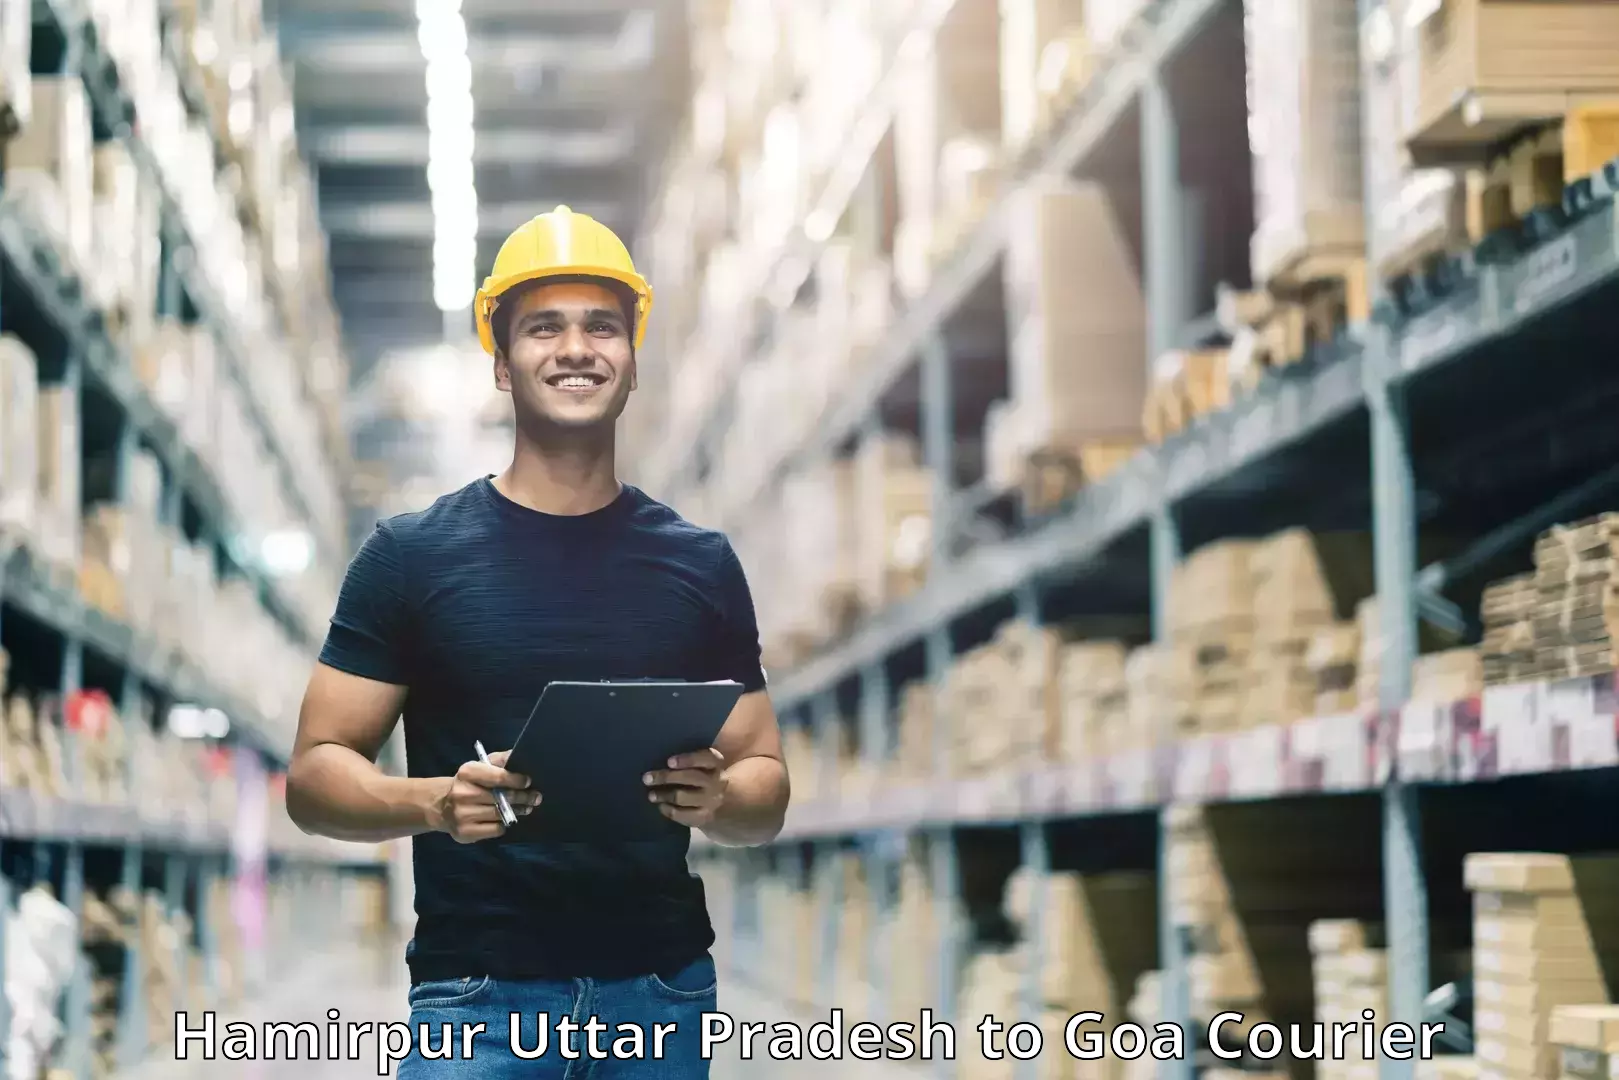 Personalized courier experiences Hamirpur Uttar Pradesh to Goa